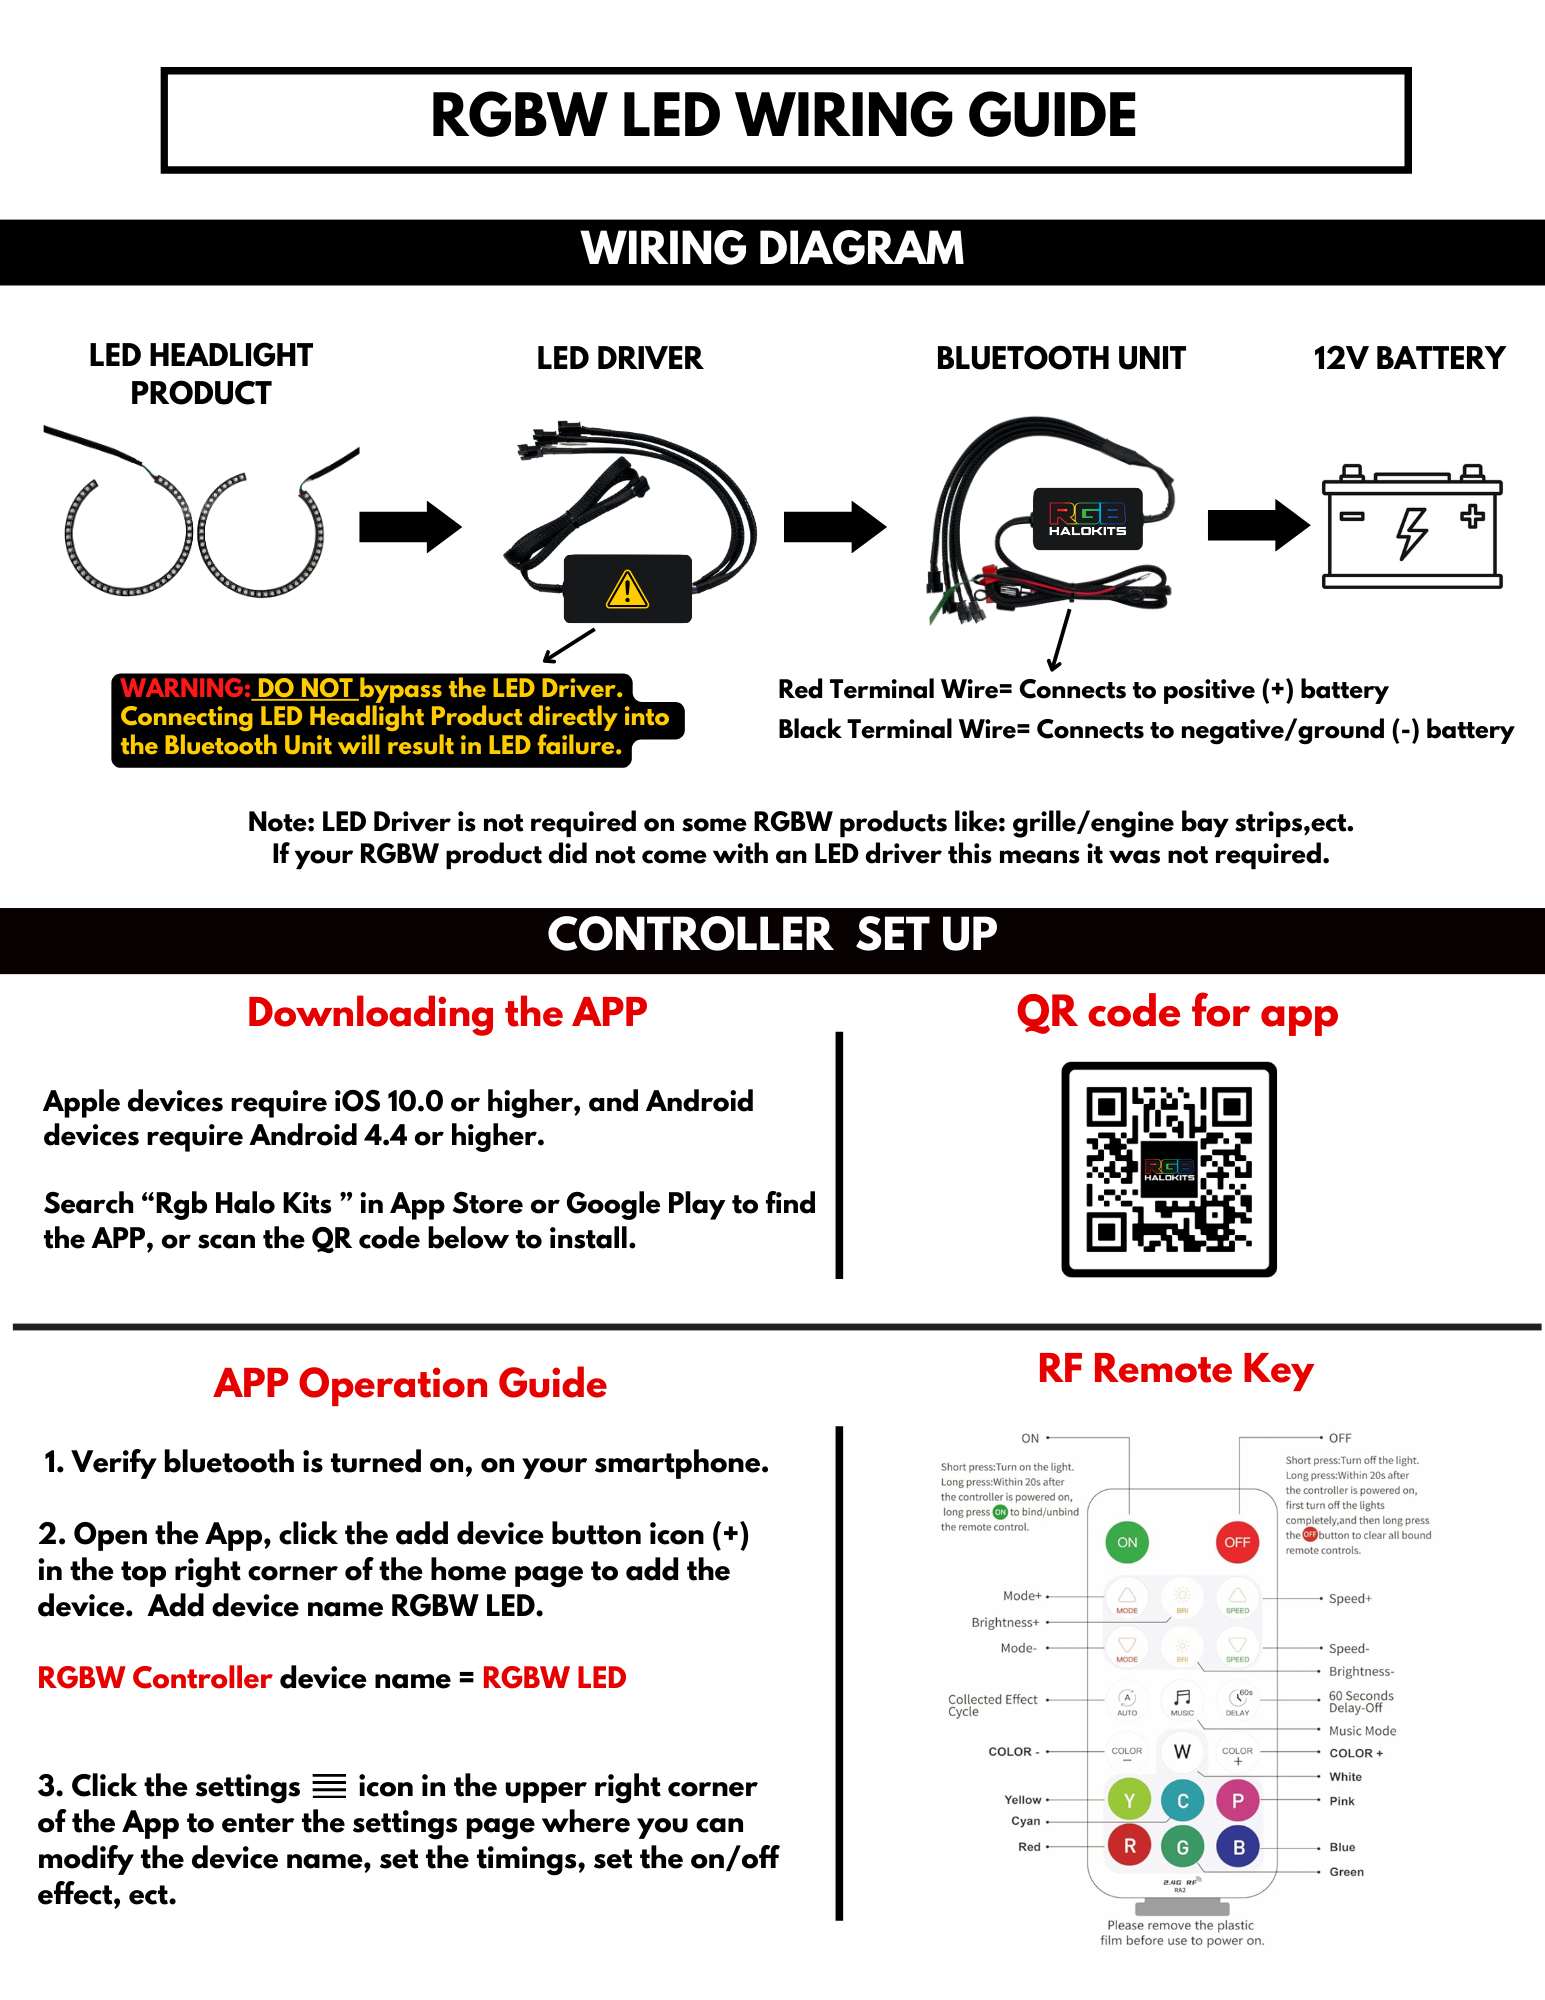 RGBW LED + Bluetooth Wiring Guide= rgb halo kits  .png